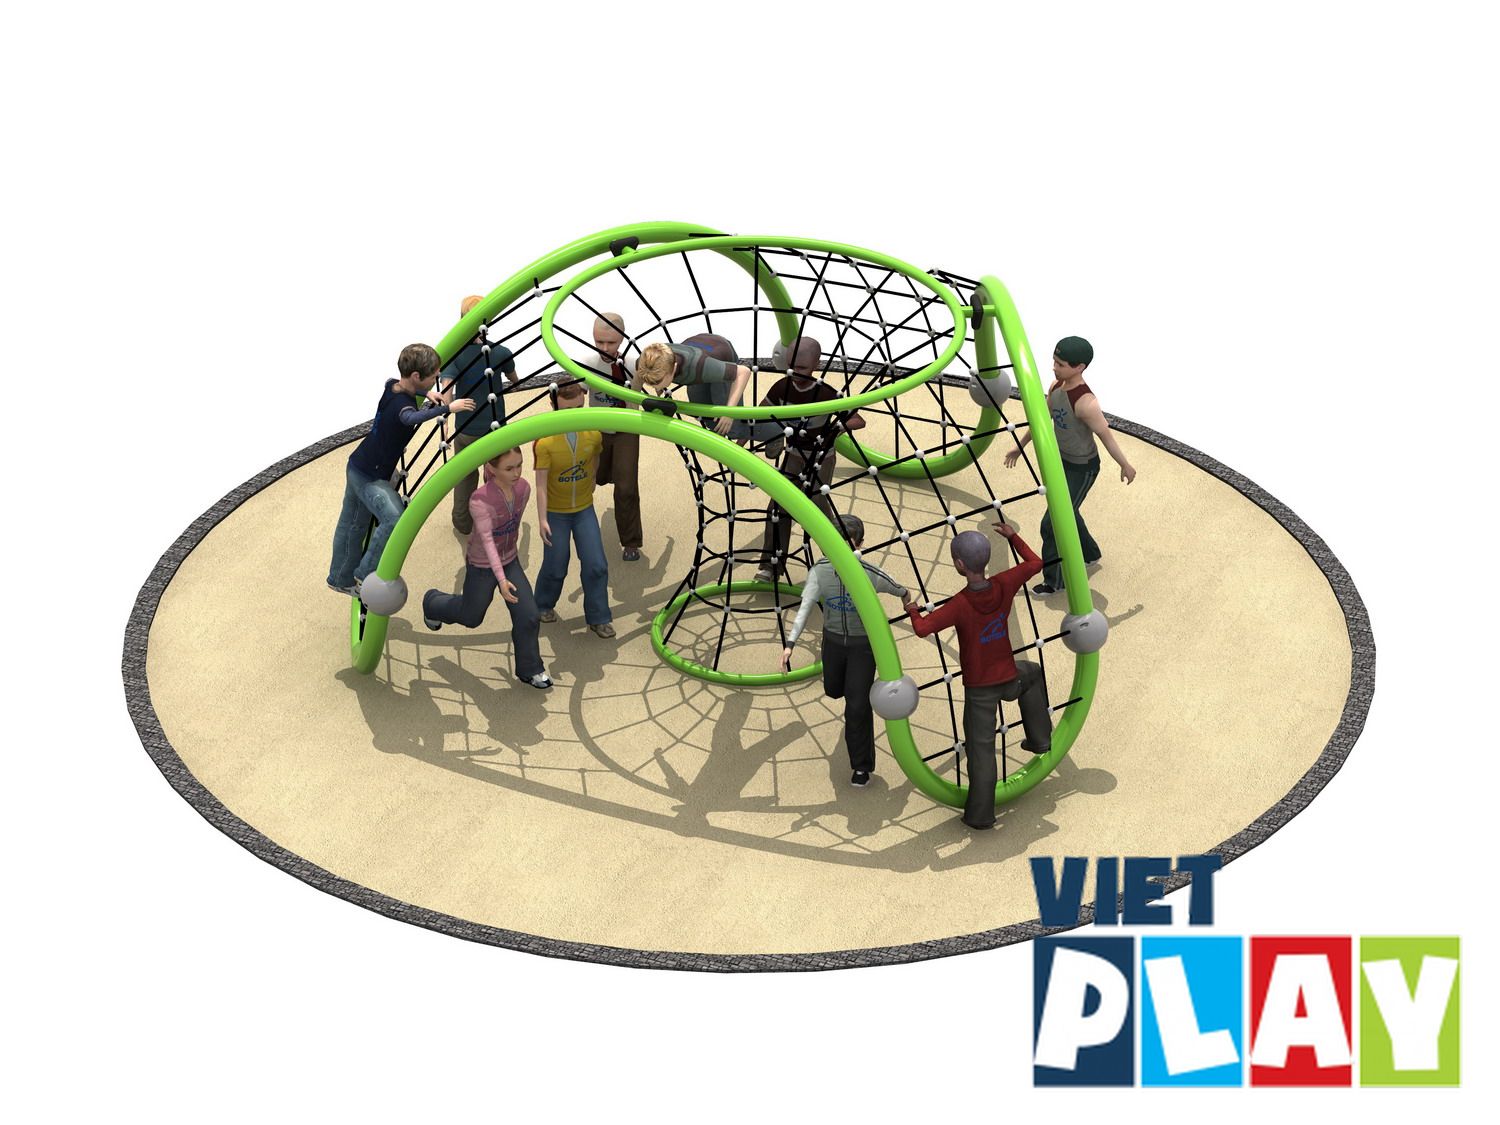 viet-play-climbing-set-5063-viet-play-expert-outdoor-playground